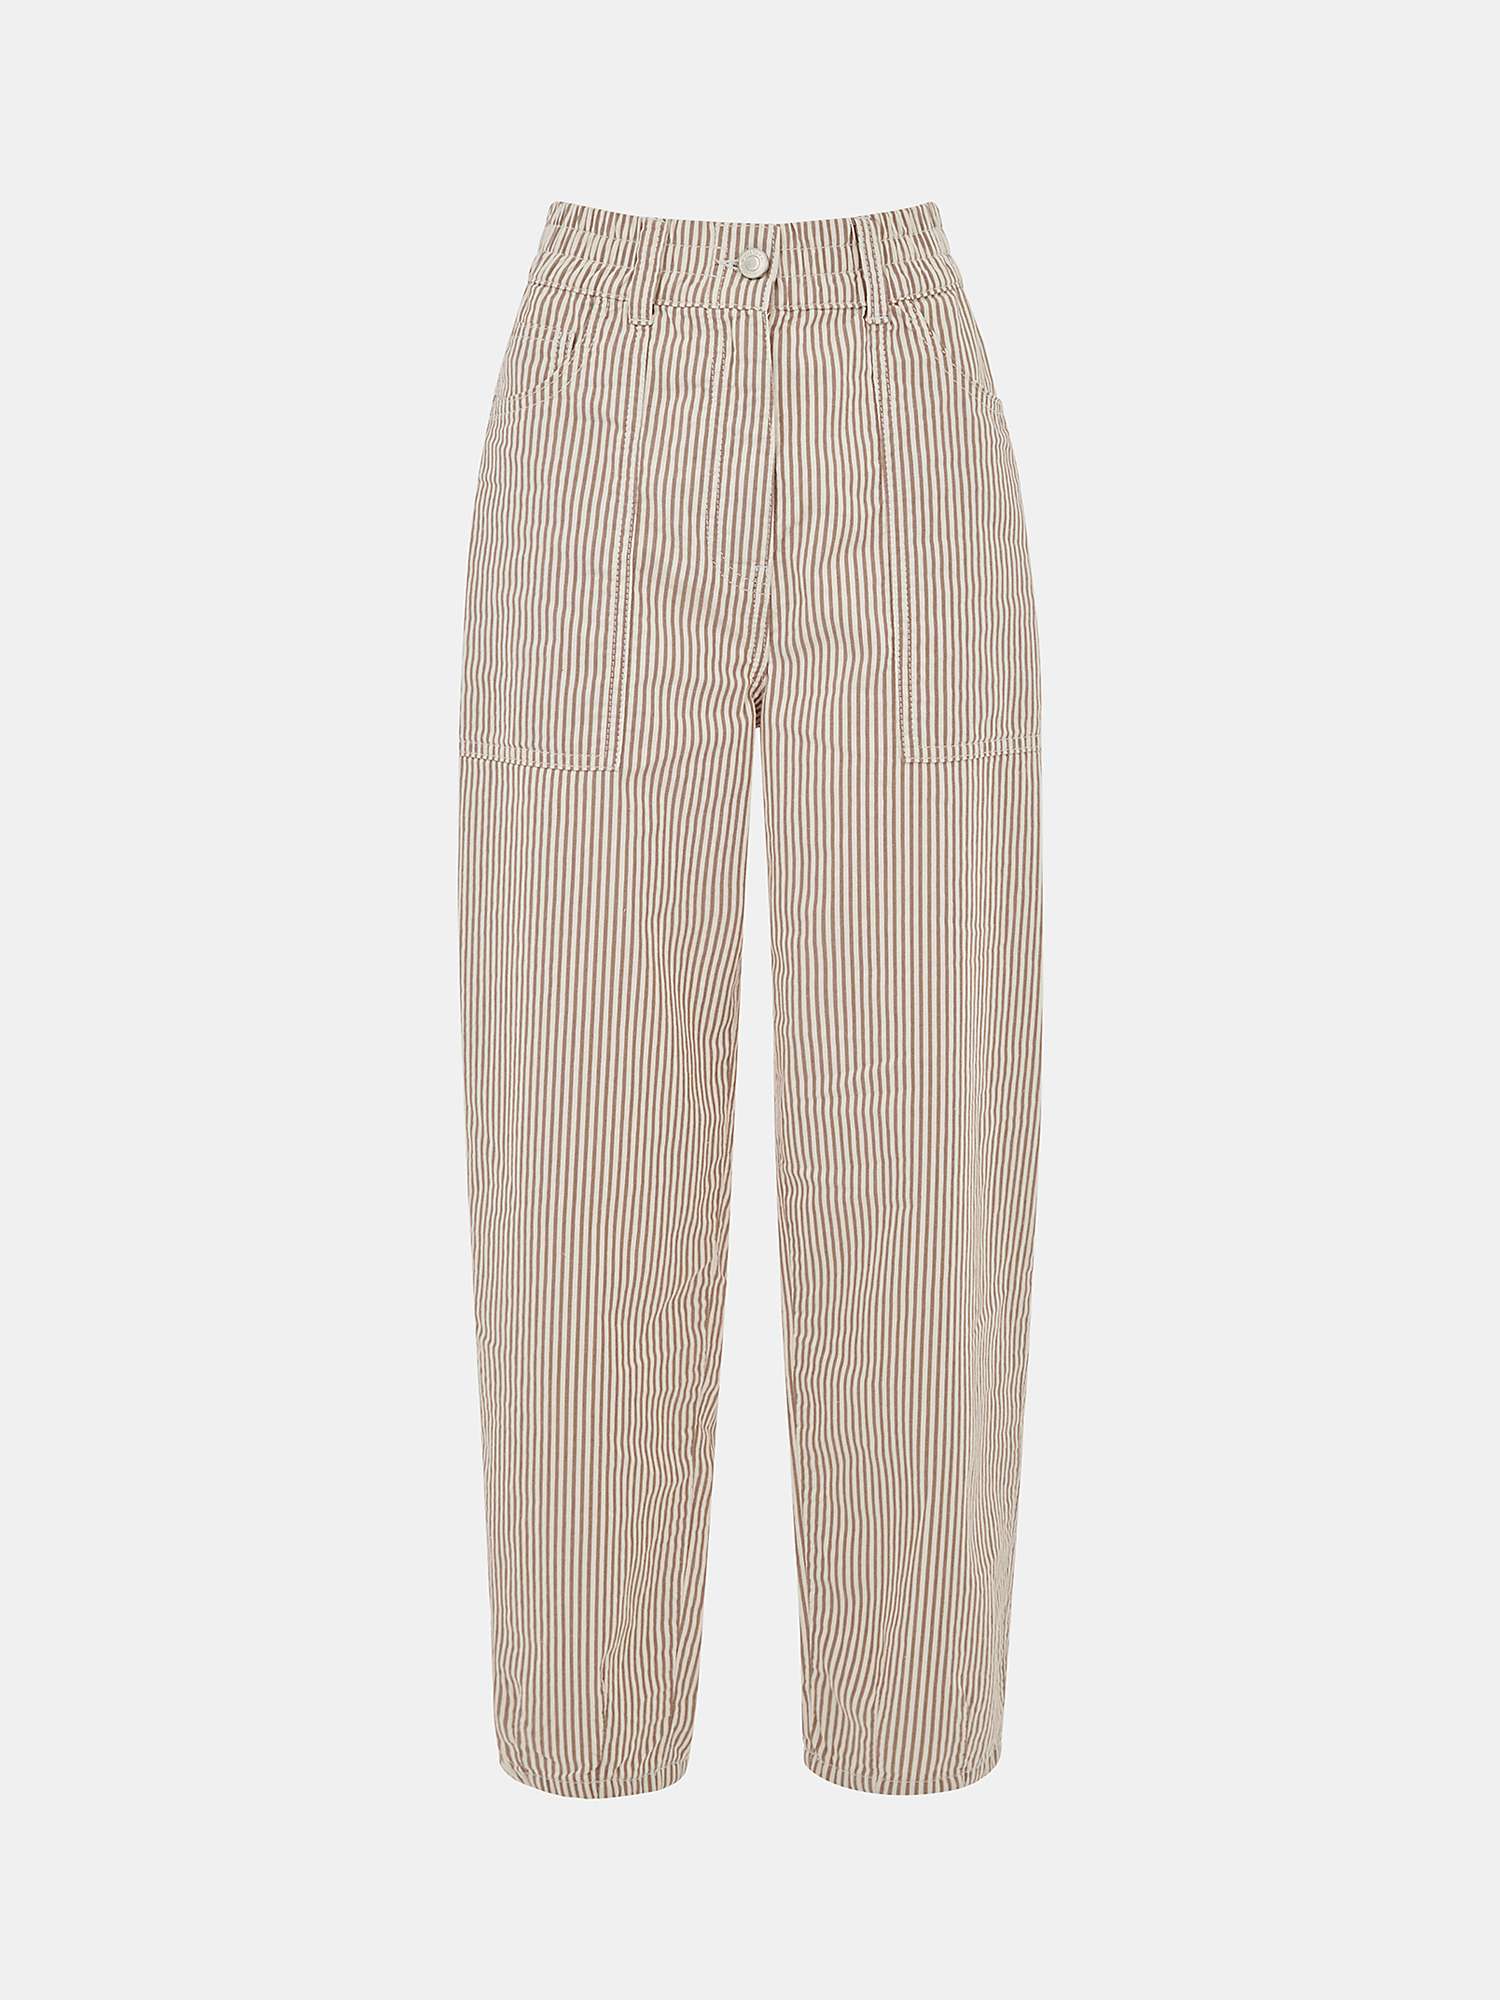 Buy Whistles Tessa Cotton Linen Blend Stripe Trousers, Brown/Cream Online at johnlewis.com